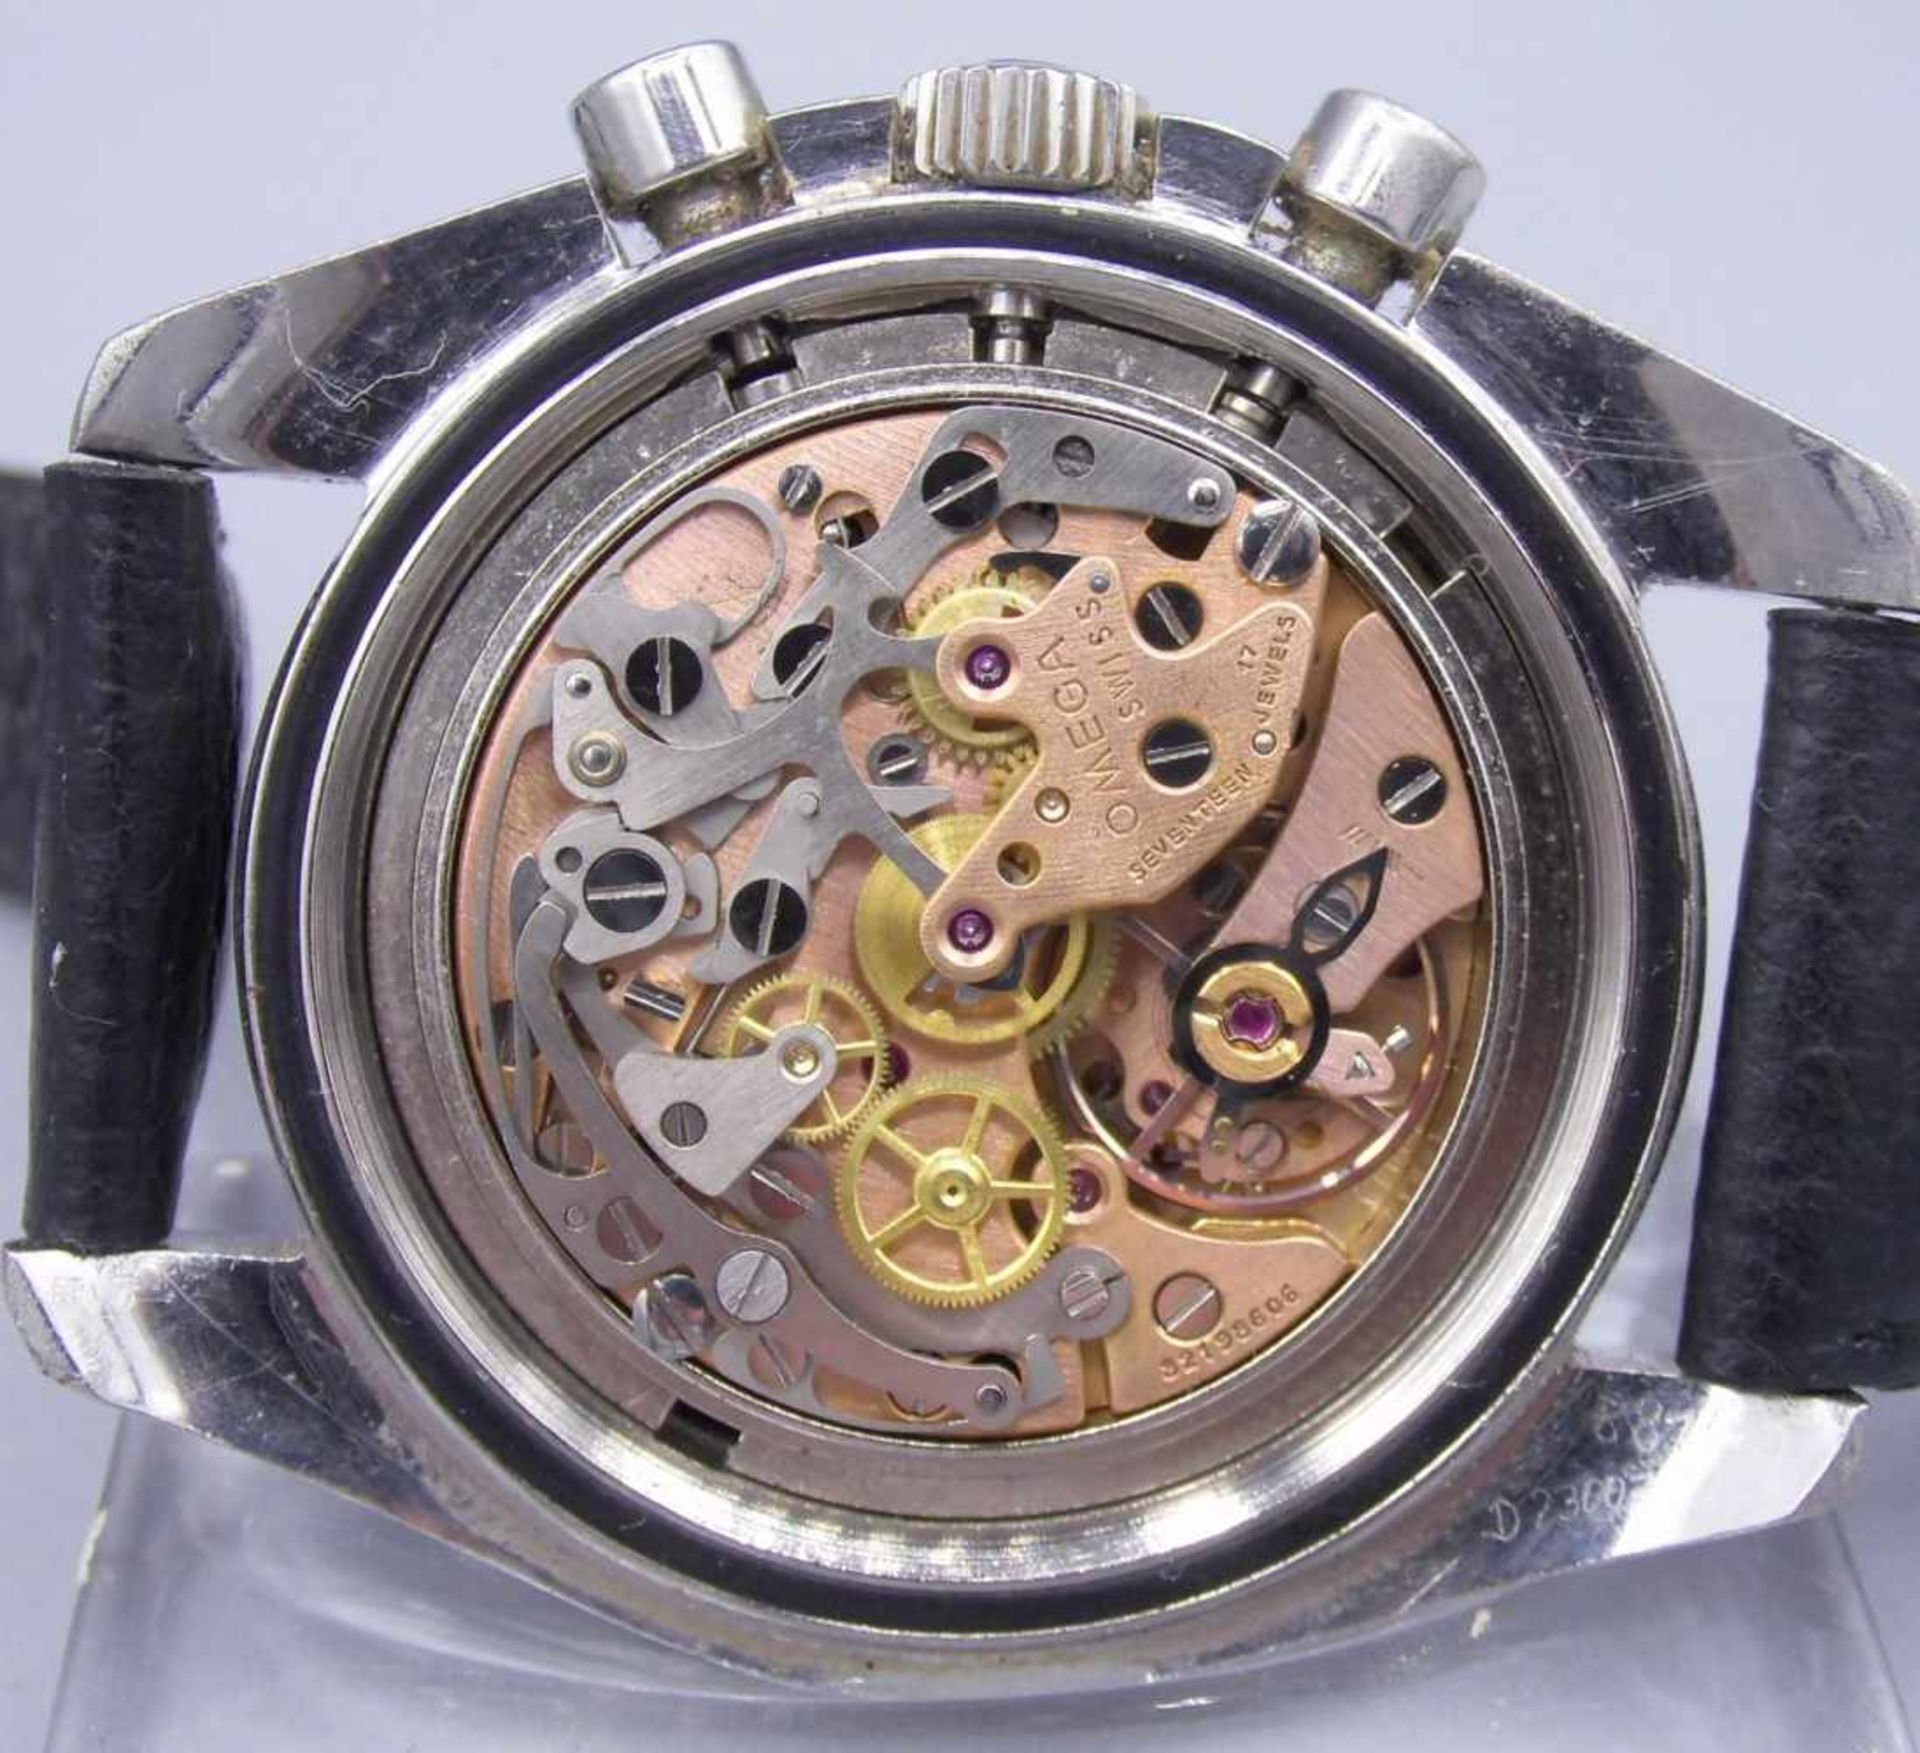 VINTAGE ARMBANDUHR / CHRONOGRAPH: OMEGA SPEEDMASTER PFROFESSIONAL - "MOONWATCH" / wristwatch, - Image 10 of 10